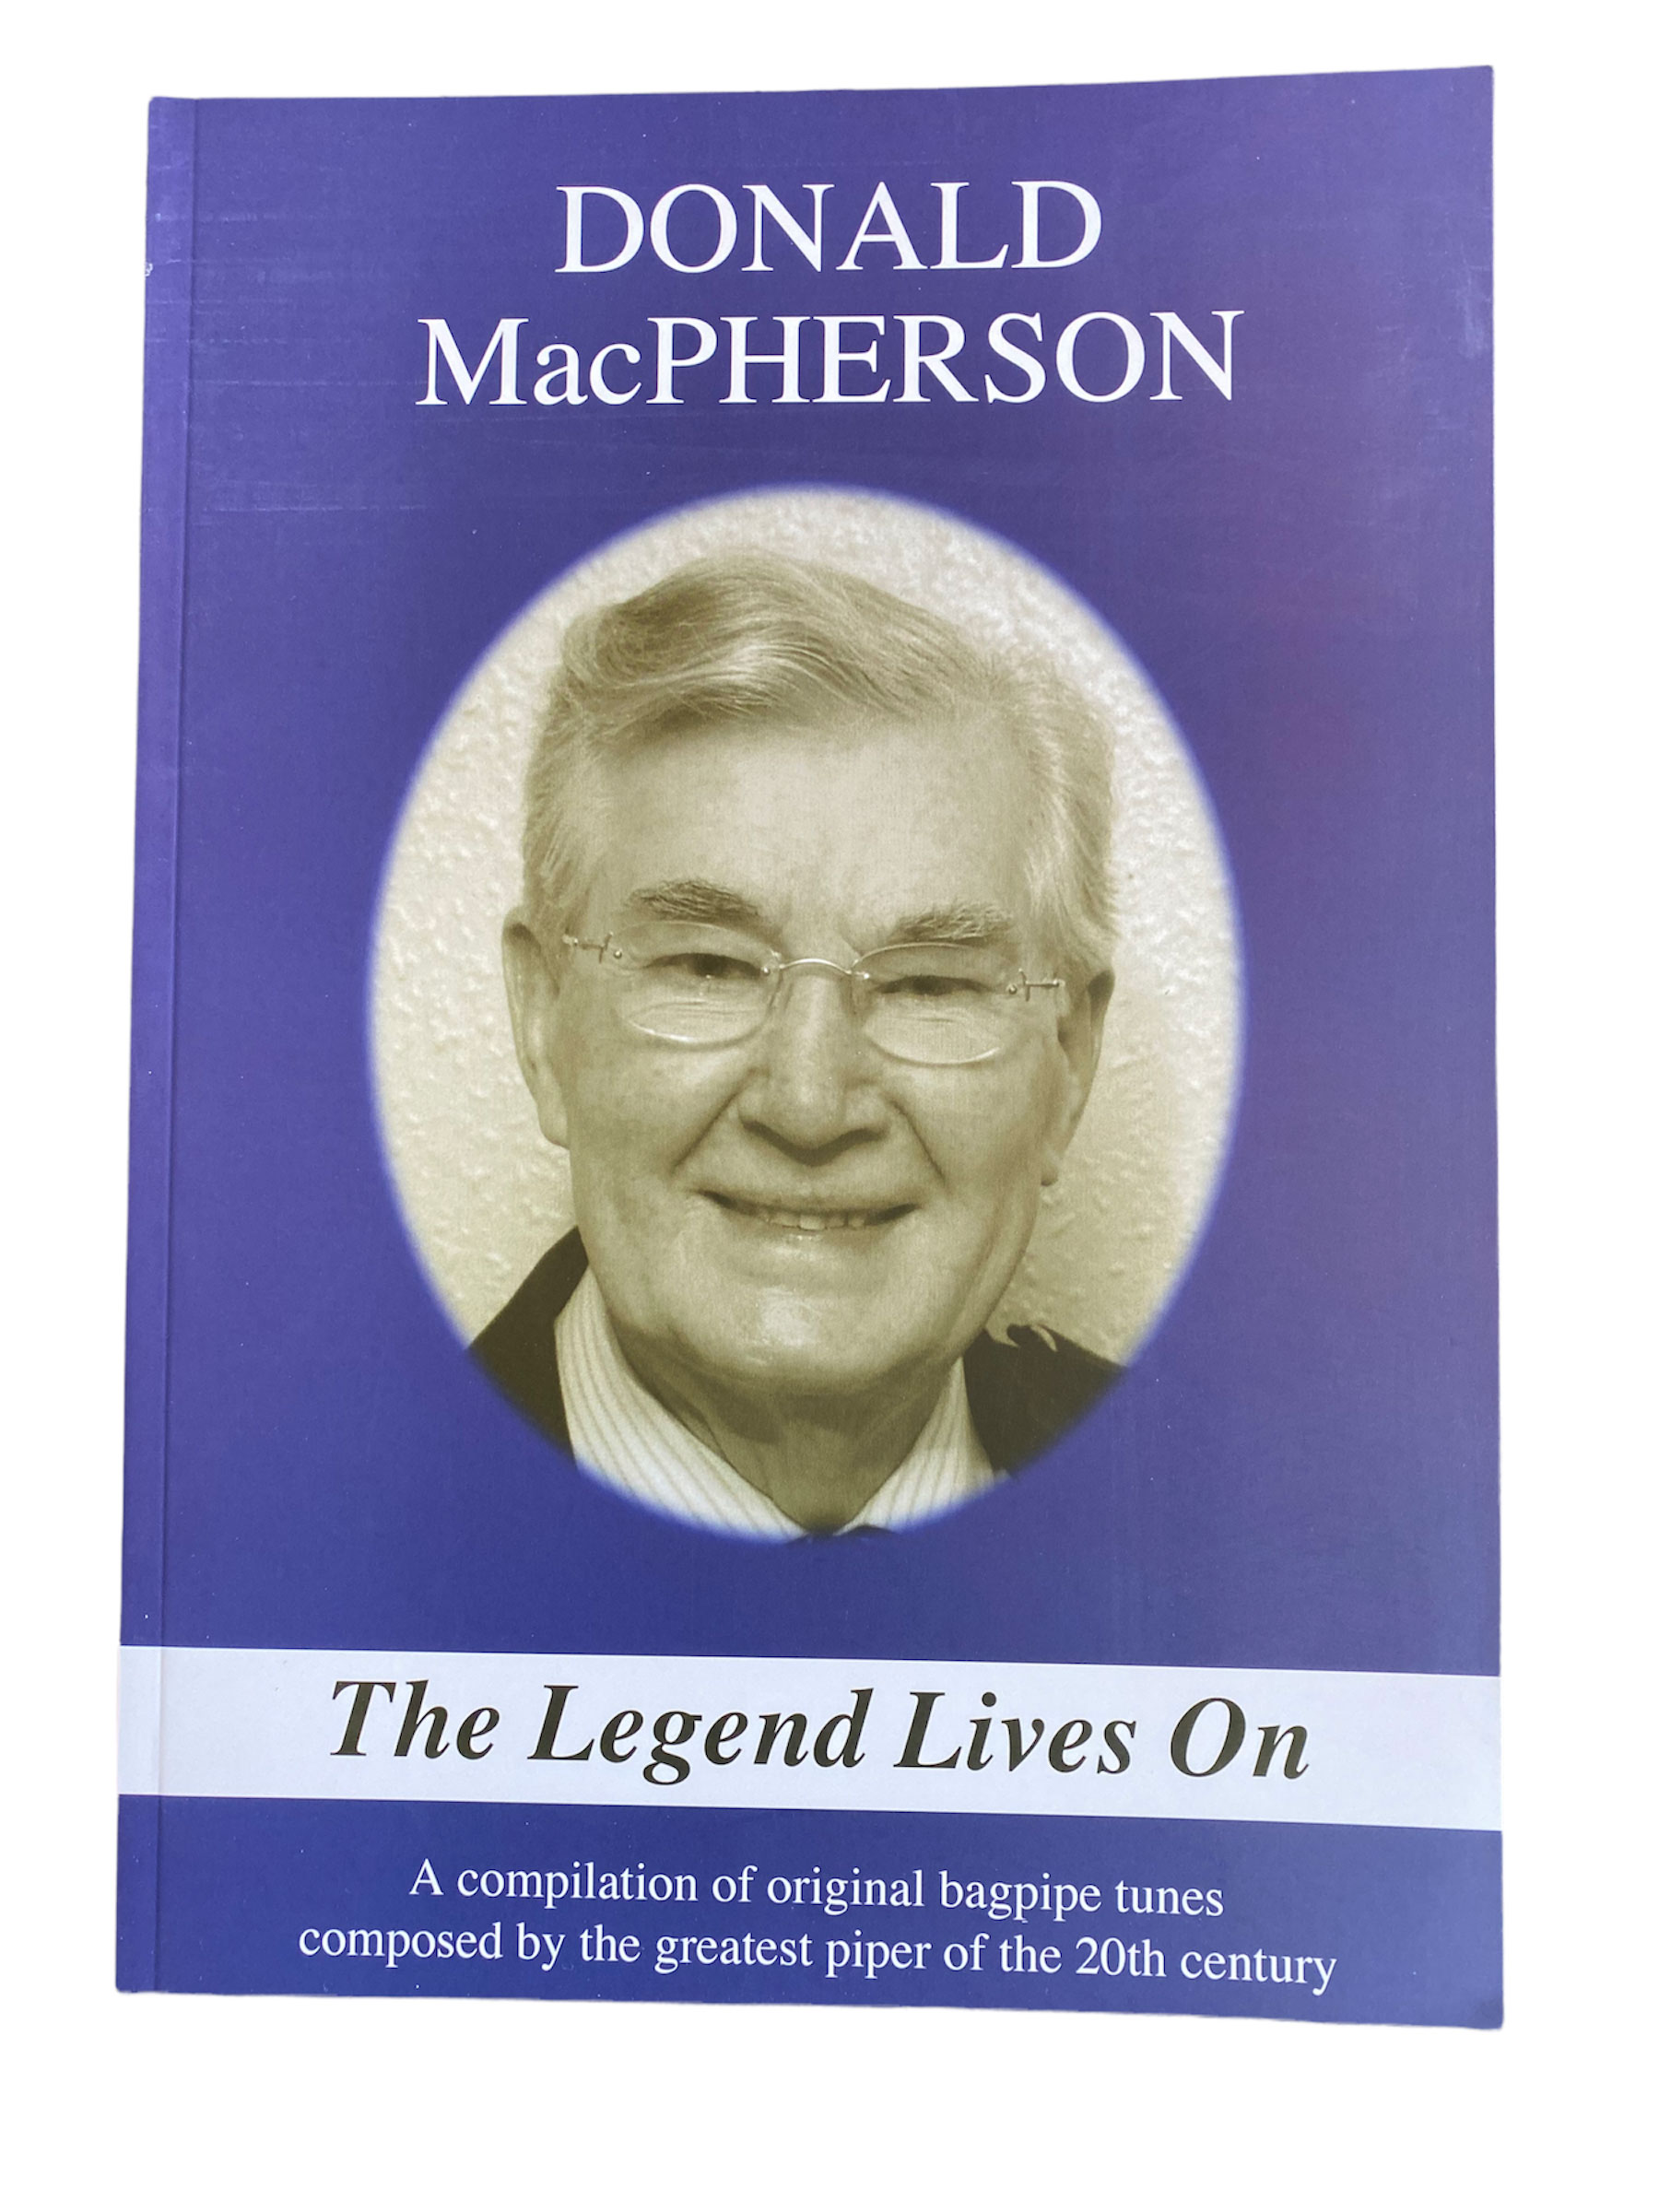 Donald MacPherson